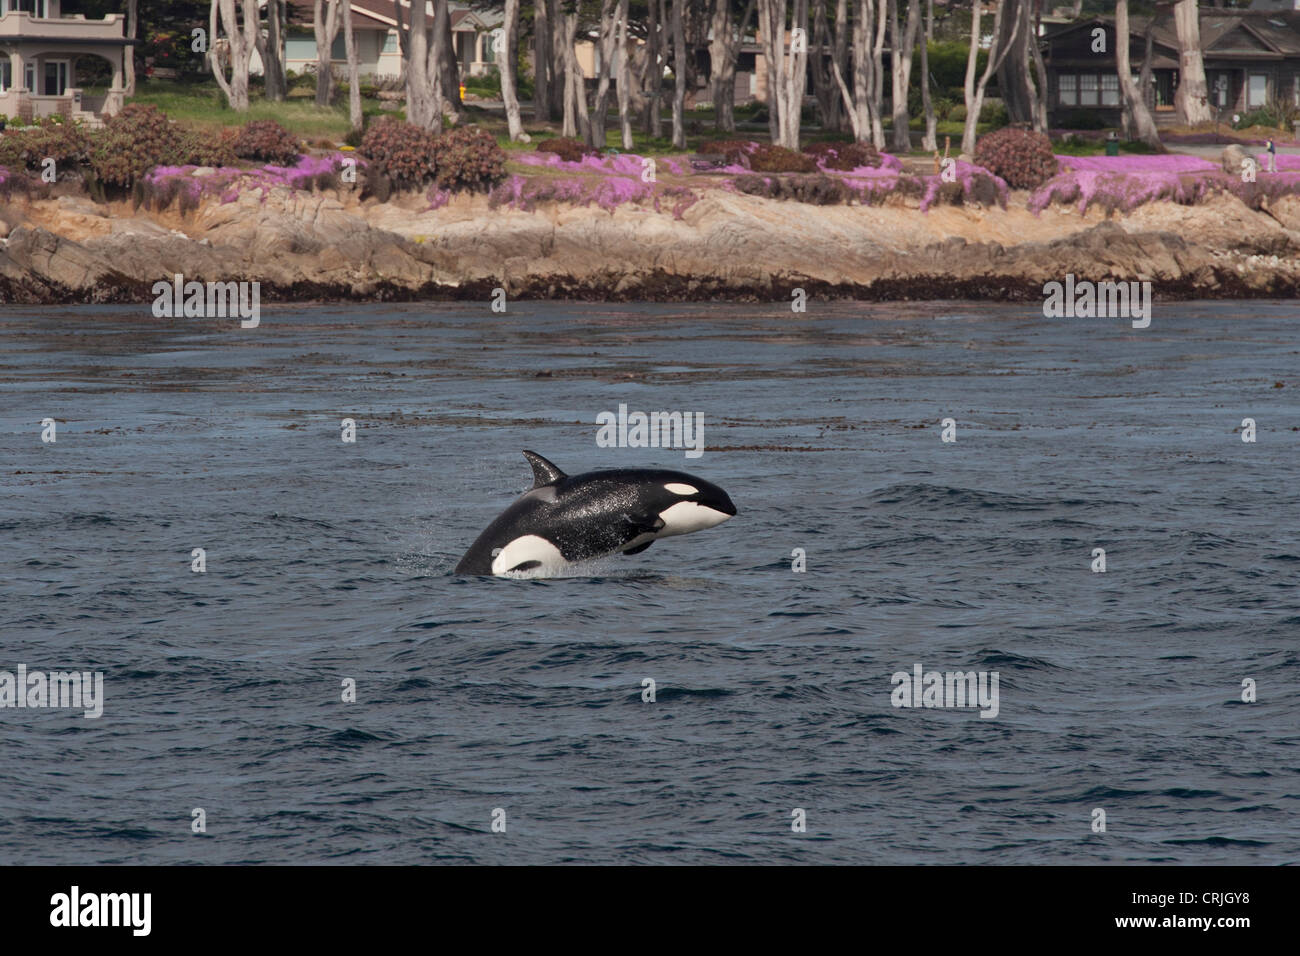 Transient Killer Whale/Orca (Orcinus orca). Juvenile porpoising. Monterey, California, Pacific Ocean. Stock Photo